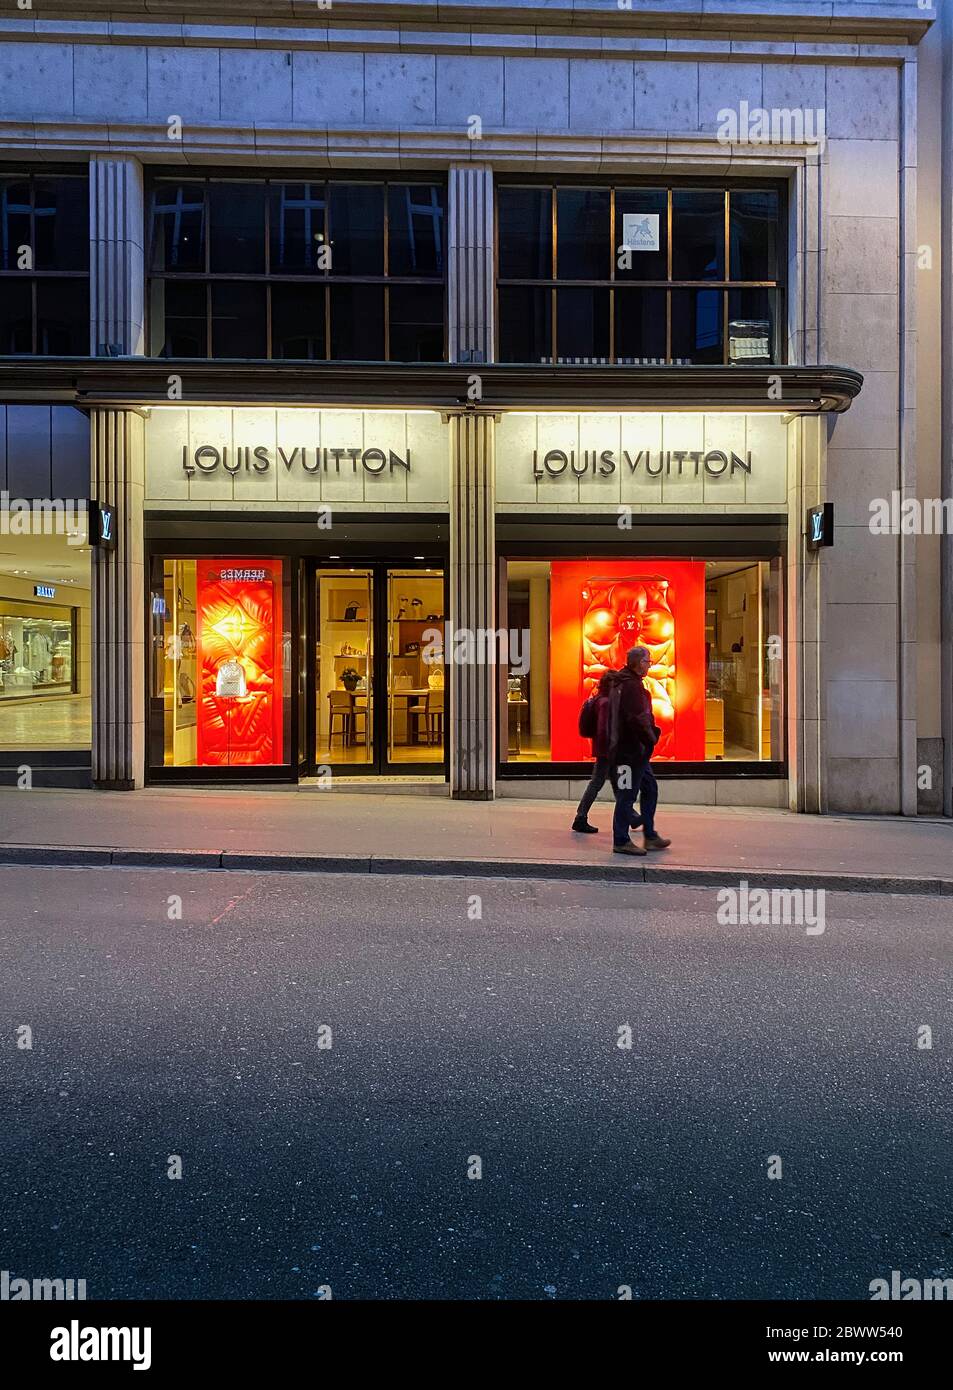 The Louis Vuitton shop front, Basel, Switzerland Stock Photo - Alamy